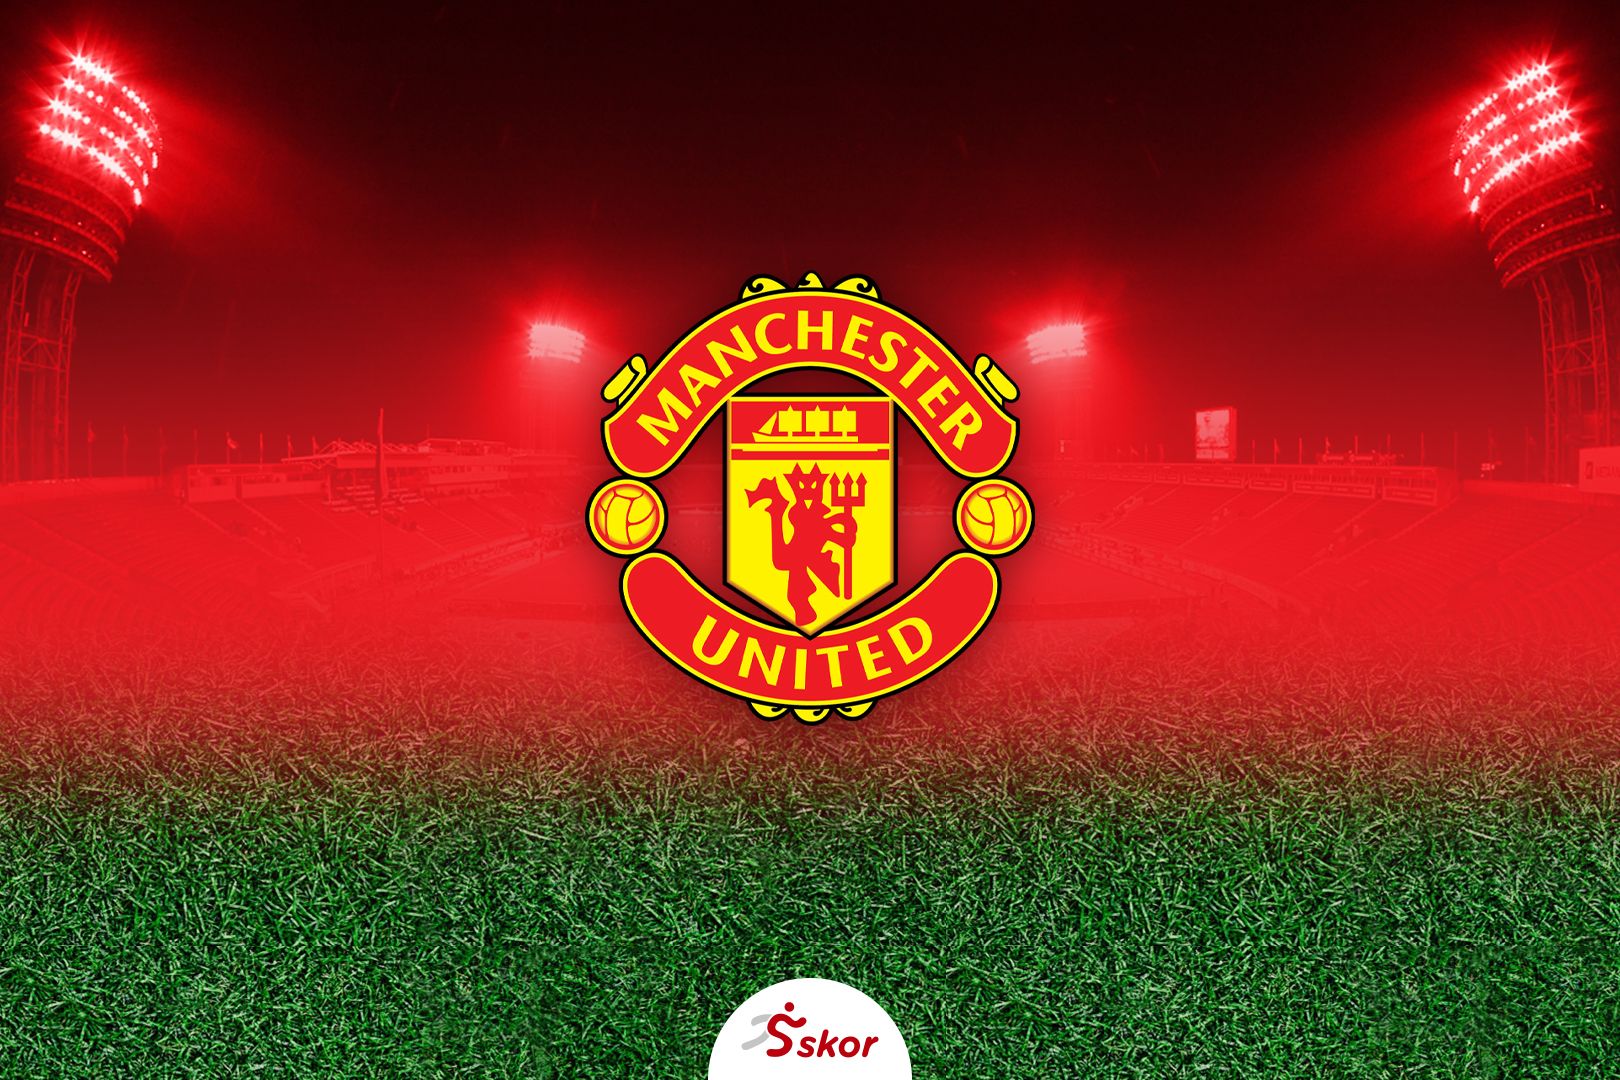 Logo Manchester United.